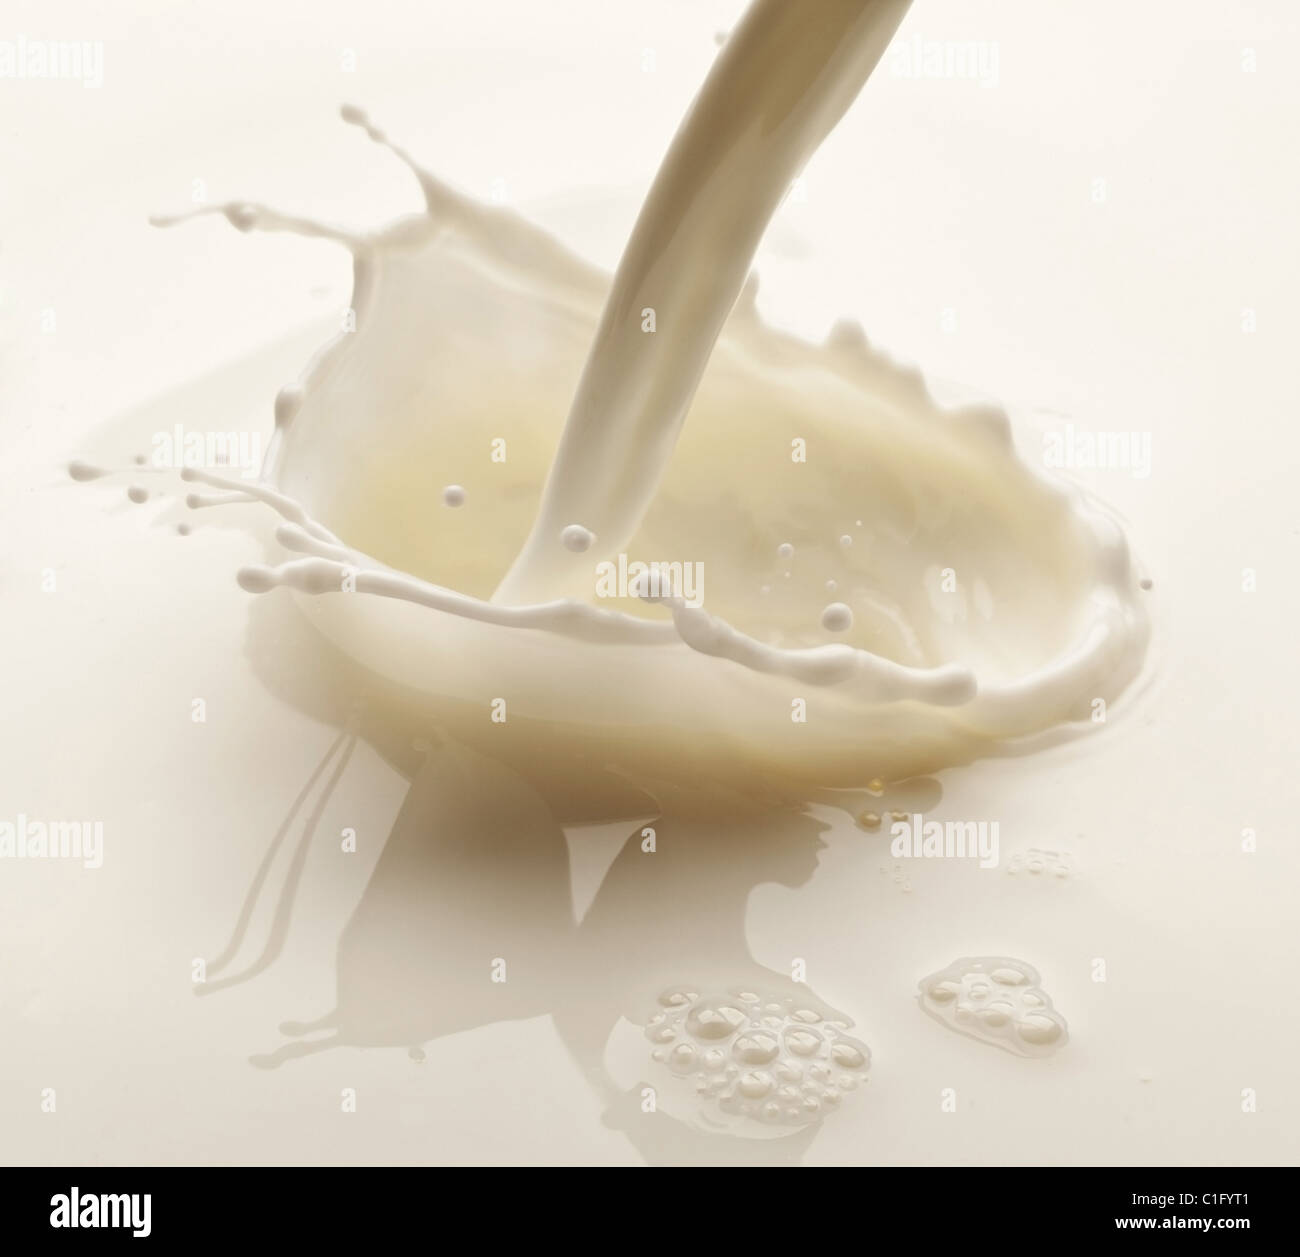 Splash of milk on a white background Stock Photo